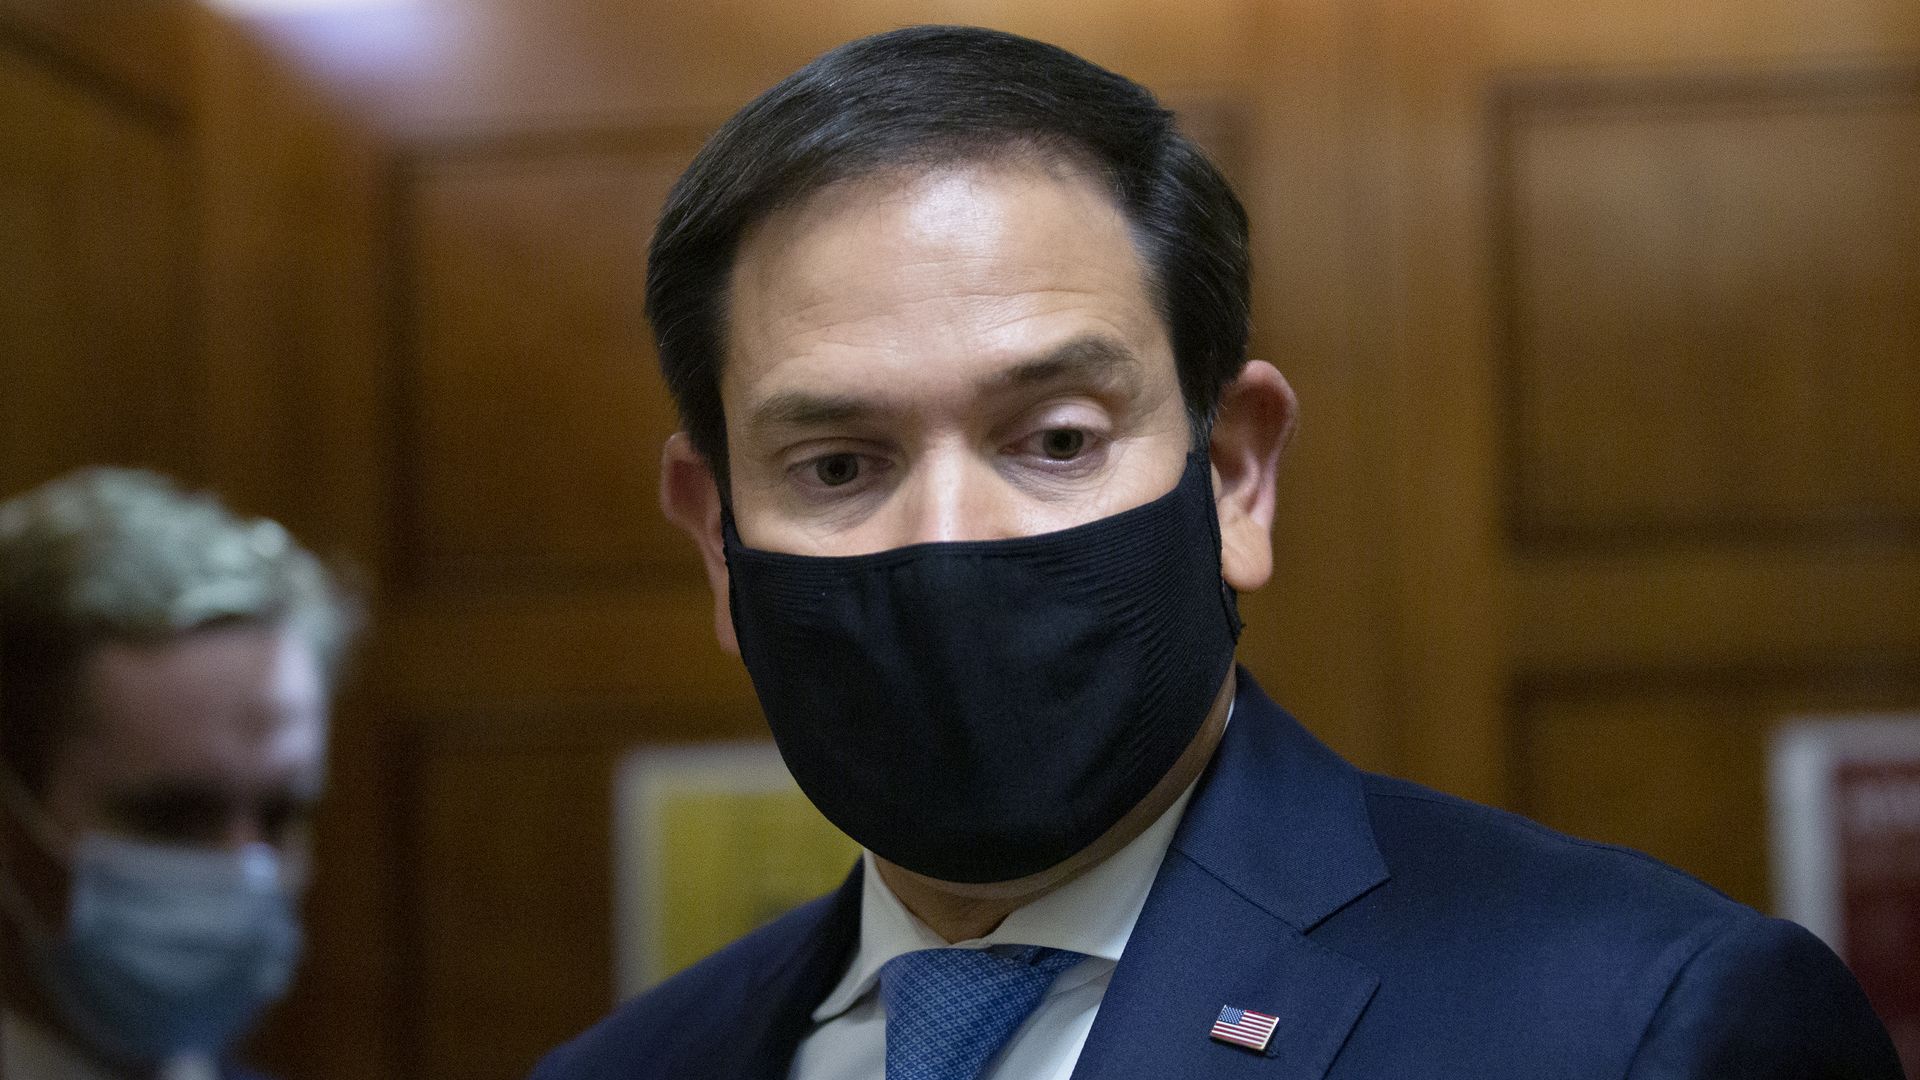 Sen. Marco Rubio wears a mask while at the Senate